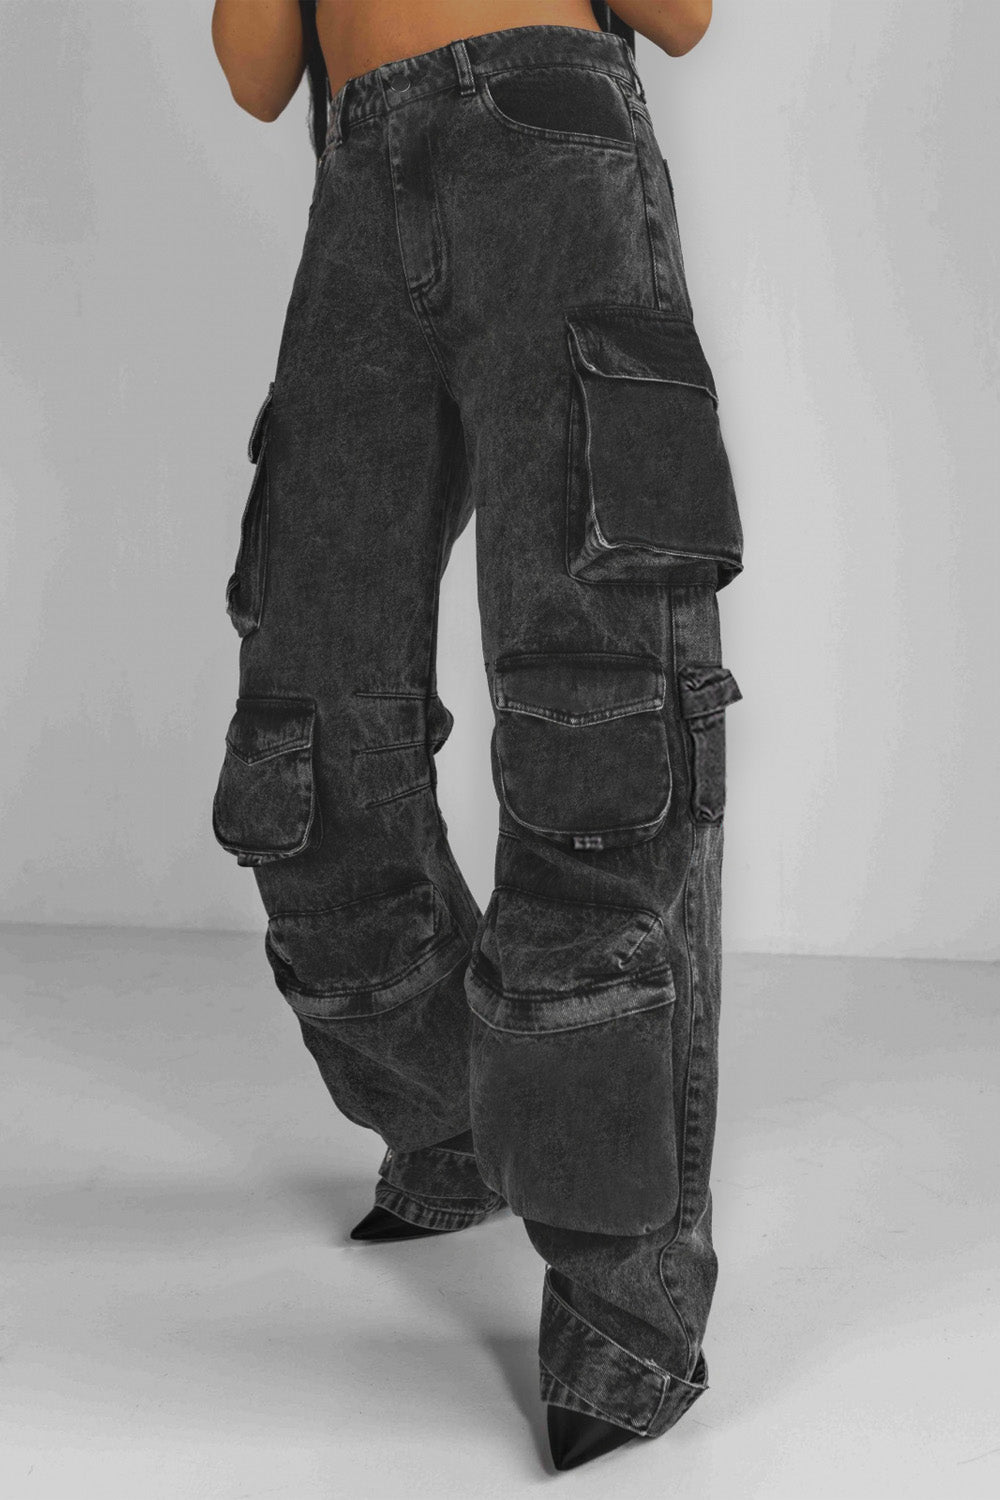 Women's Cargo Jeans, Black & Low Rise Cargo Pants